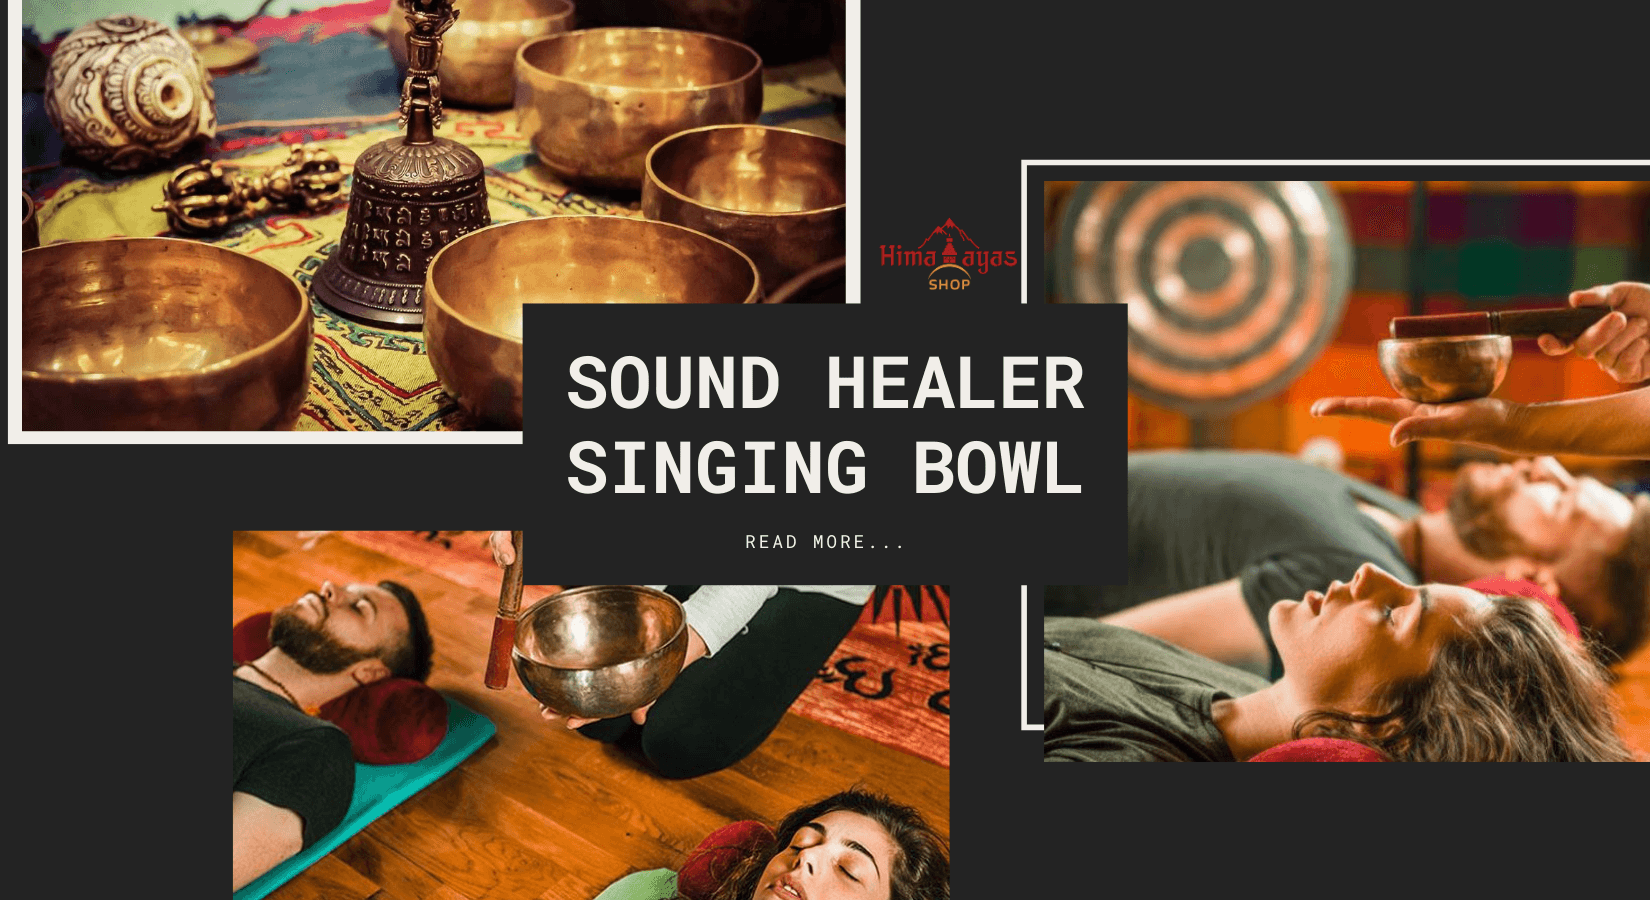 Singing Bowl Sound Healers - Himalayas Shop